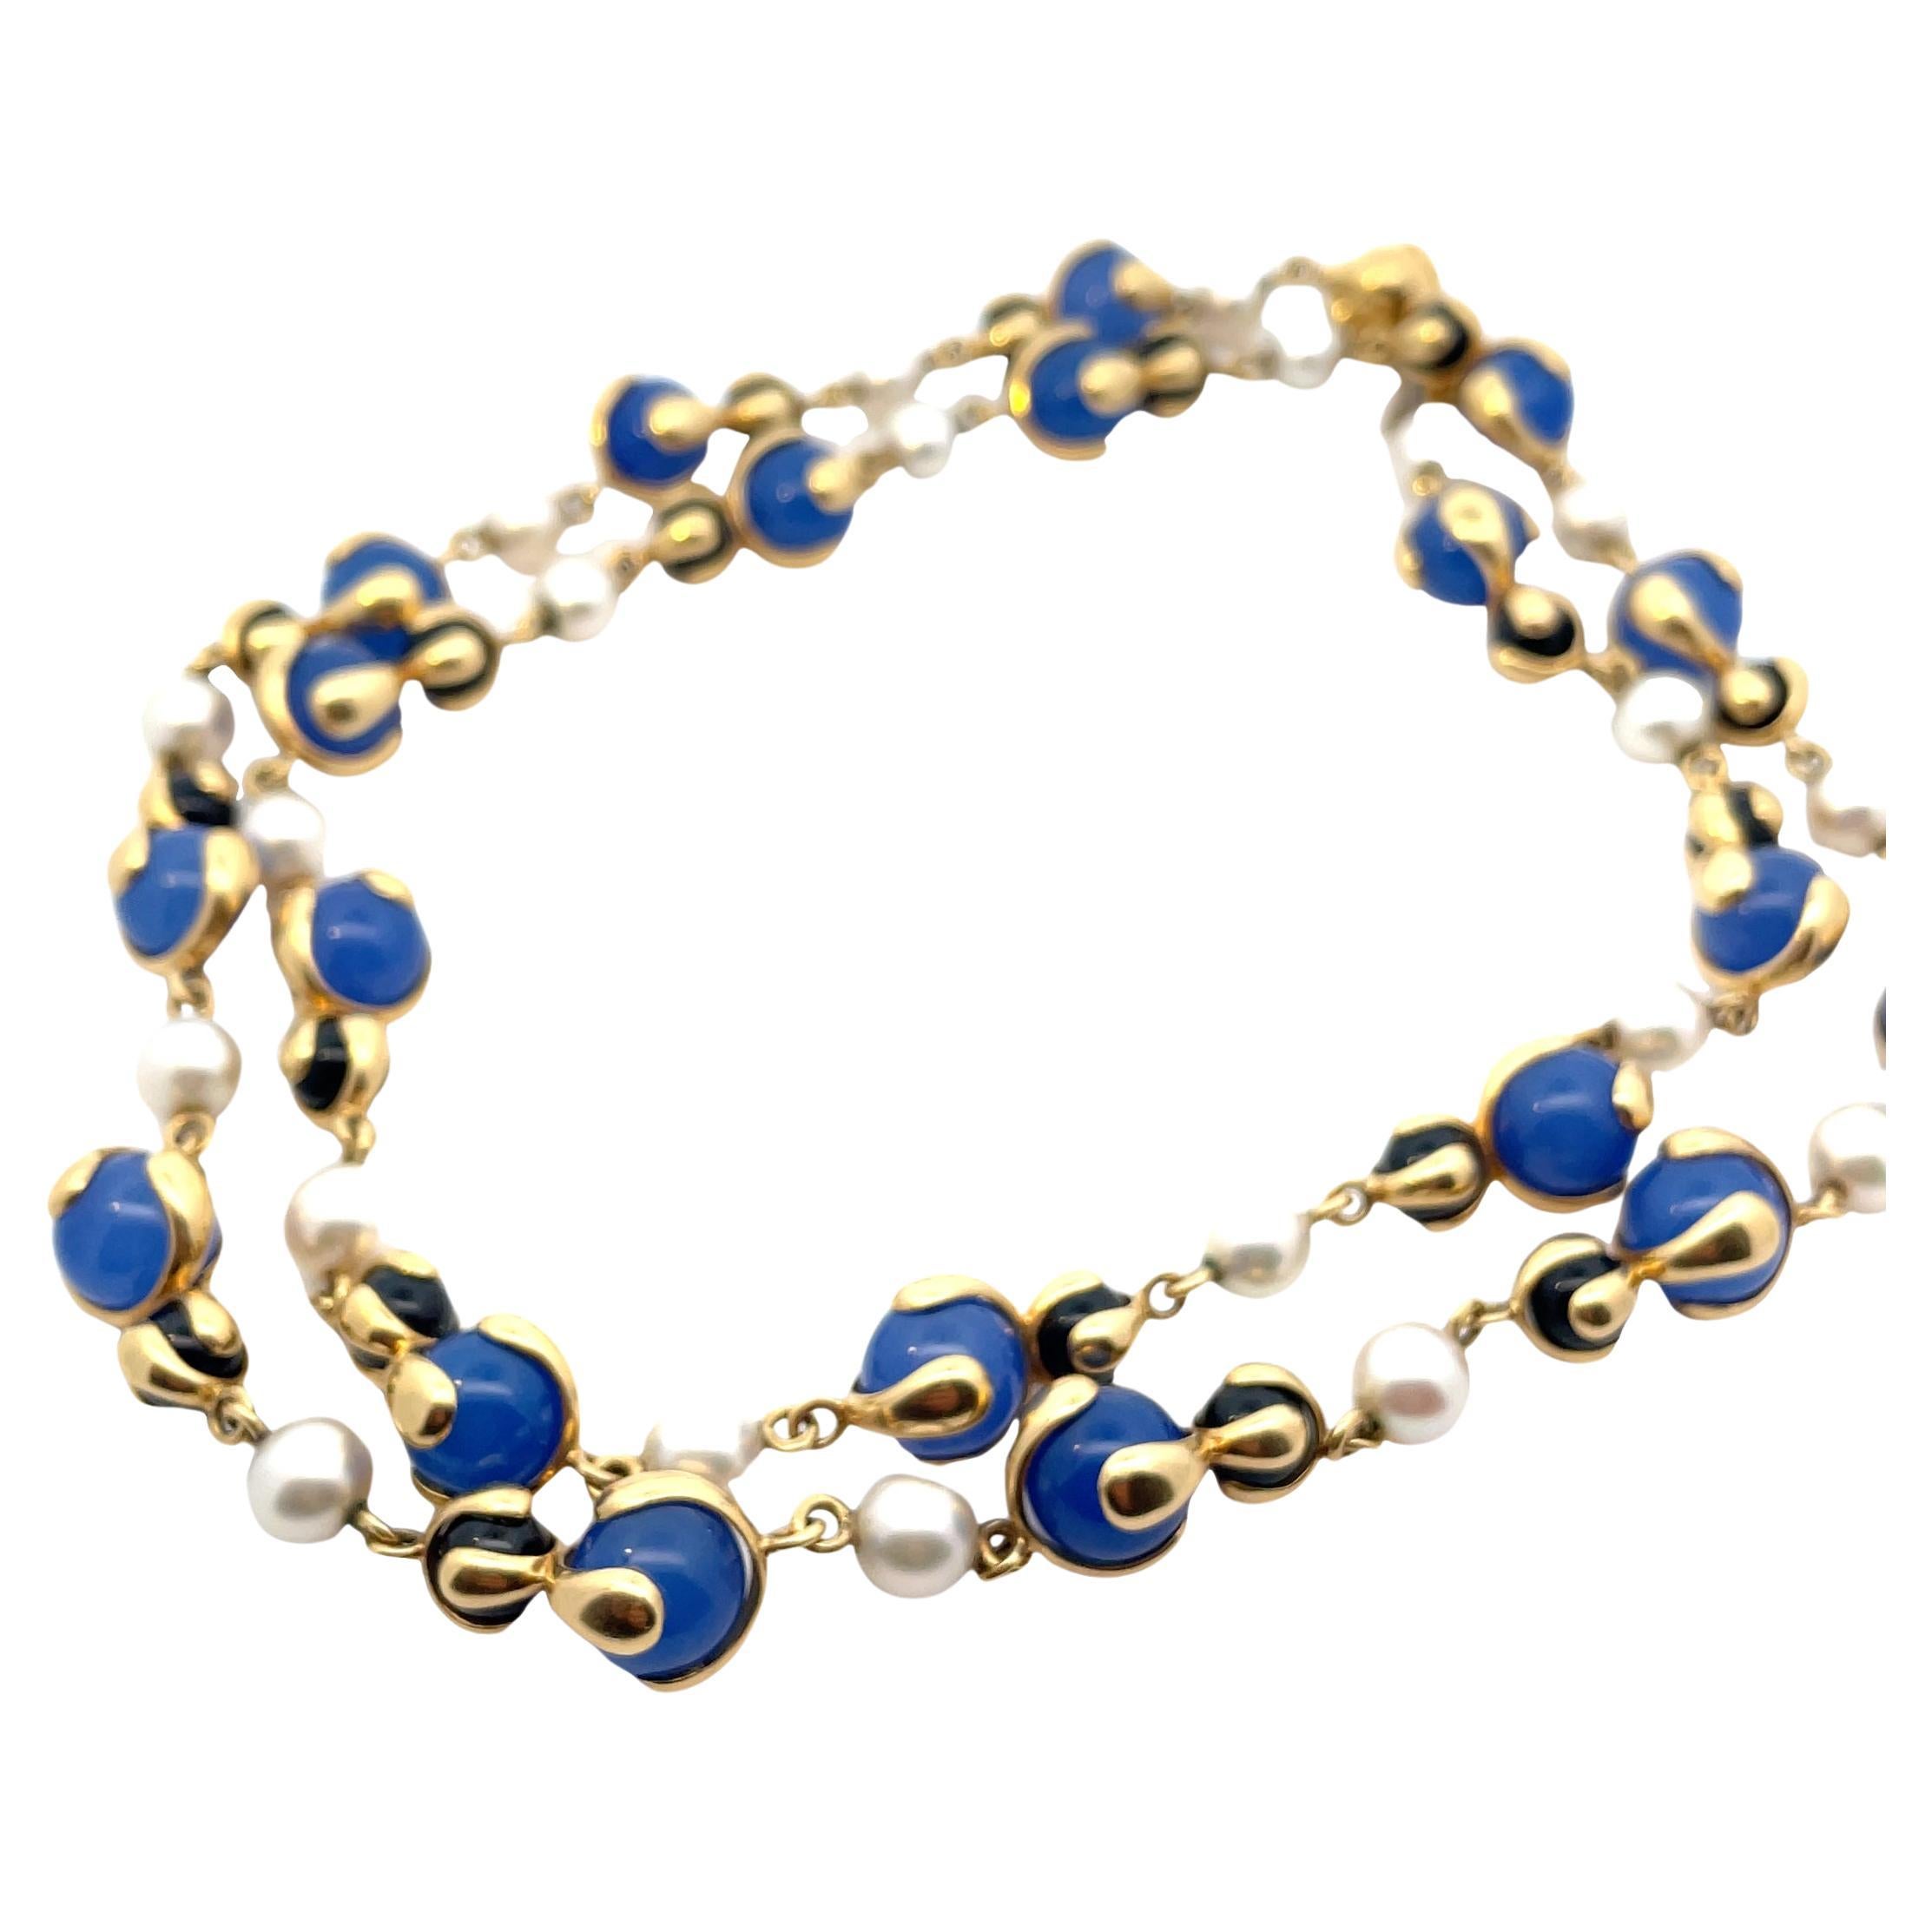 Marina B Pearl Blue, Onyx Bead Gold Necklace "Cardan" Long Necklace